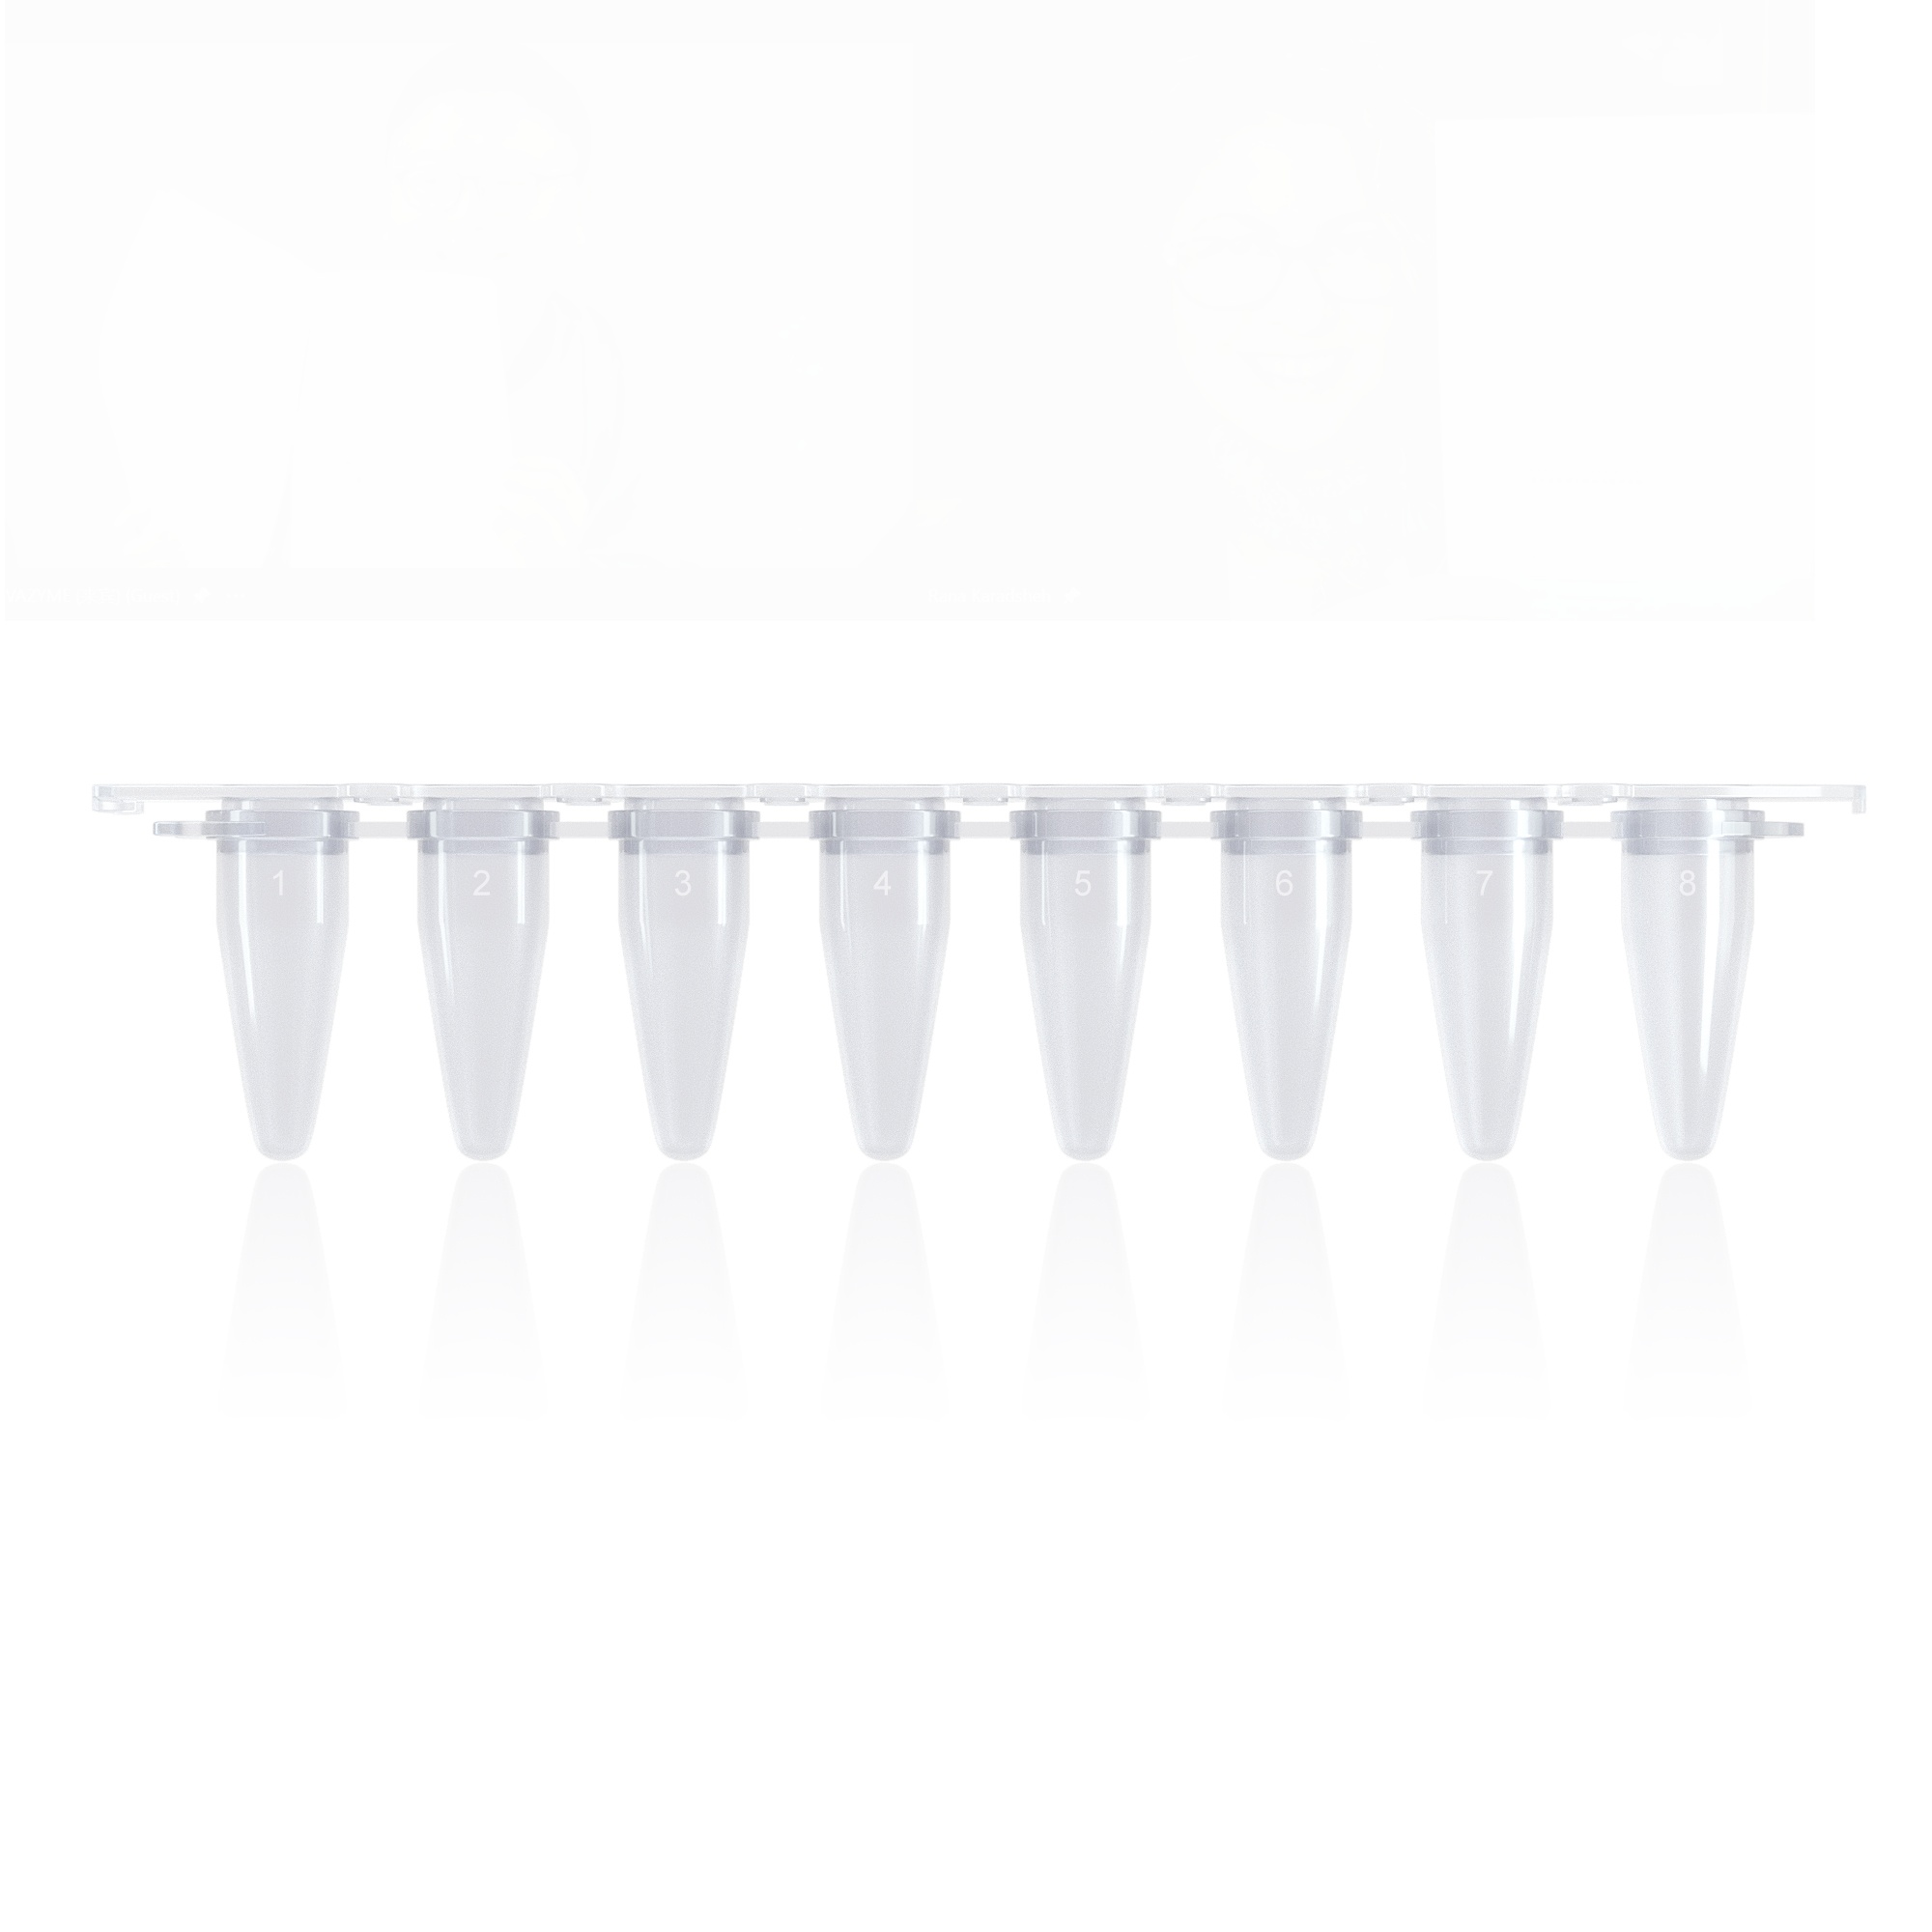 0.1 ml 8-Tube PCR Strips (with Caps) PCR00801-EN